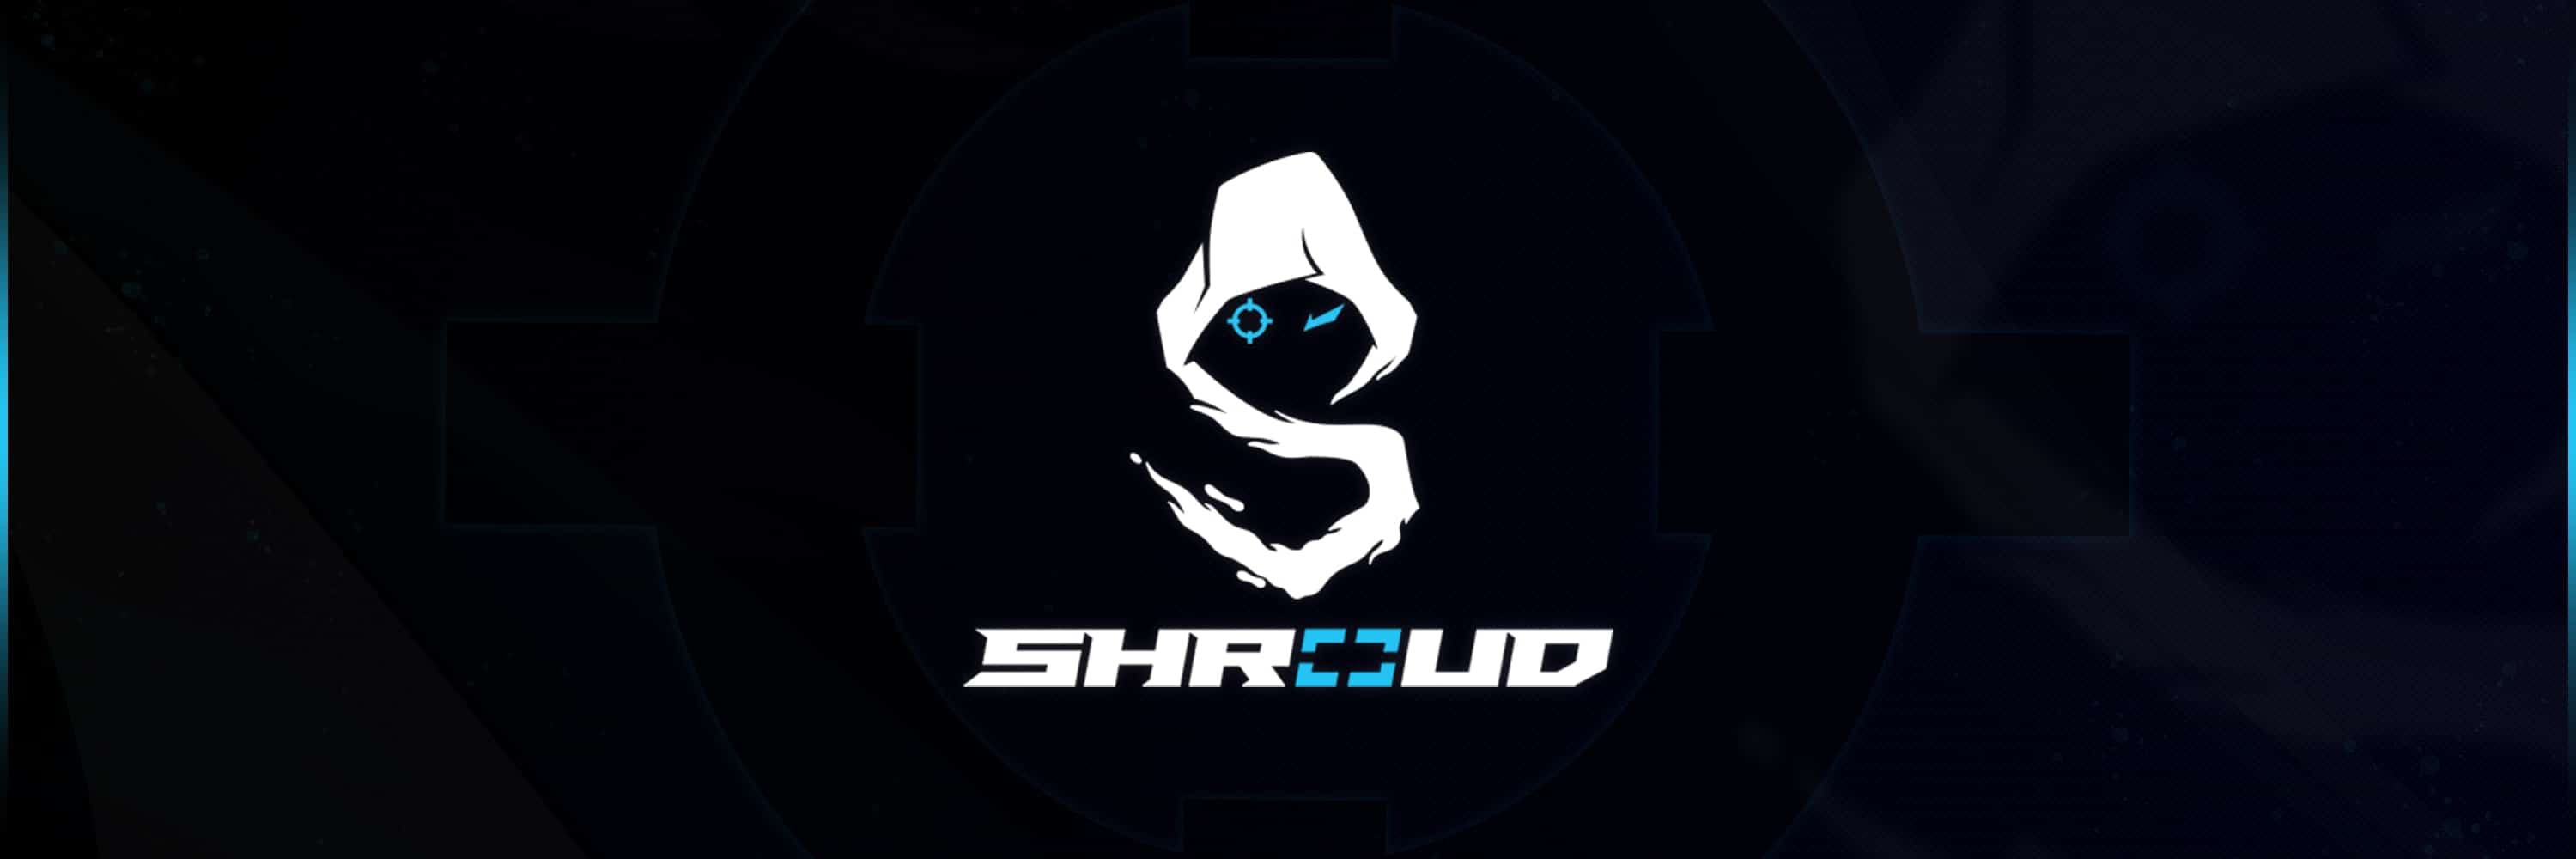 Shroud Profile